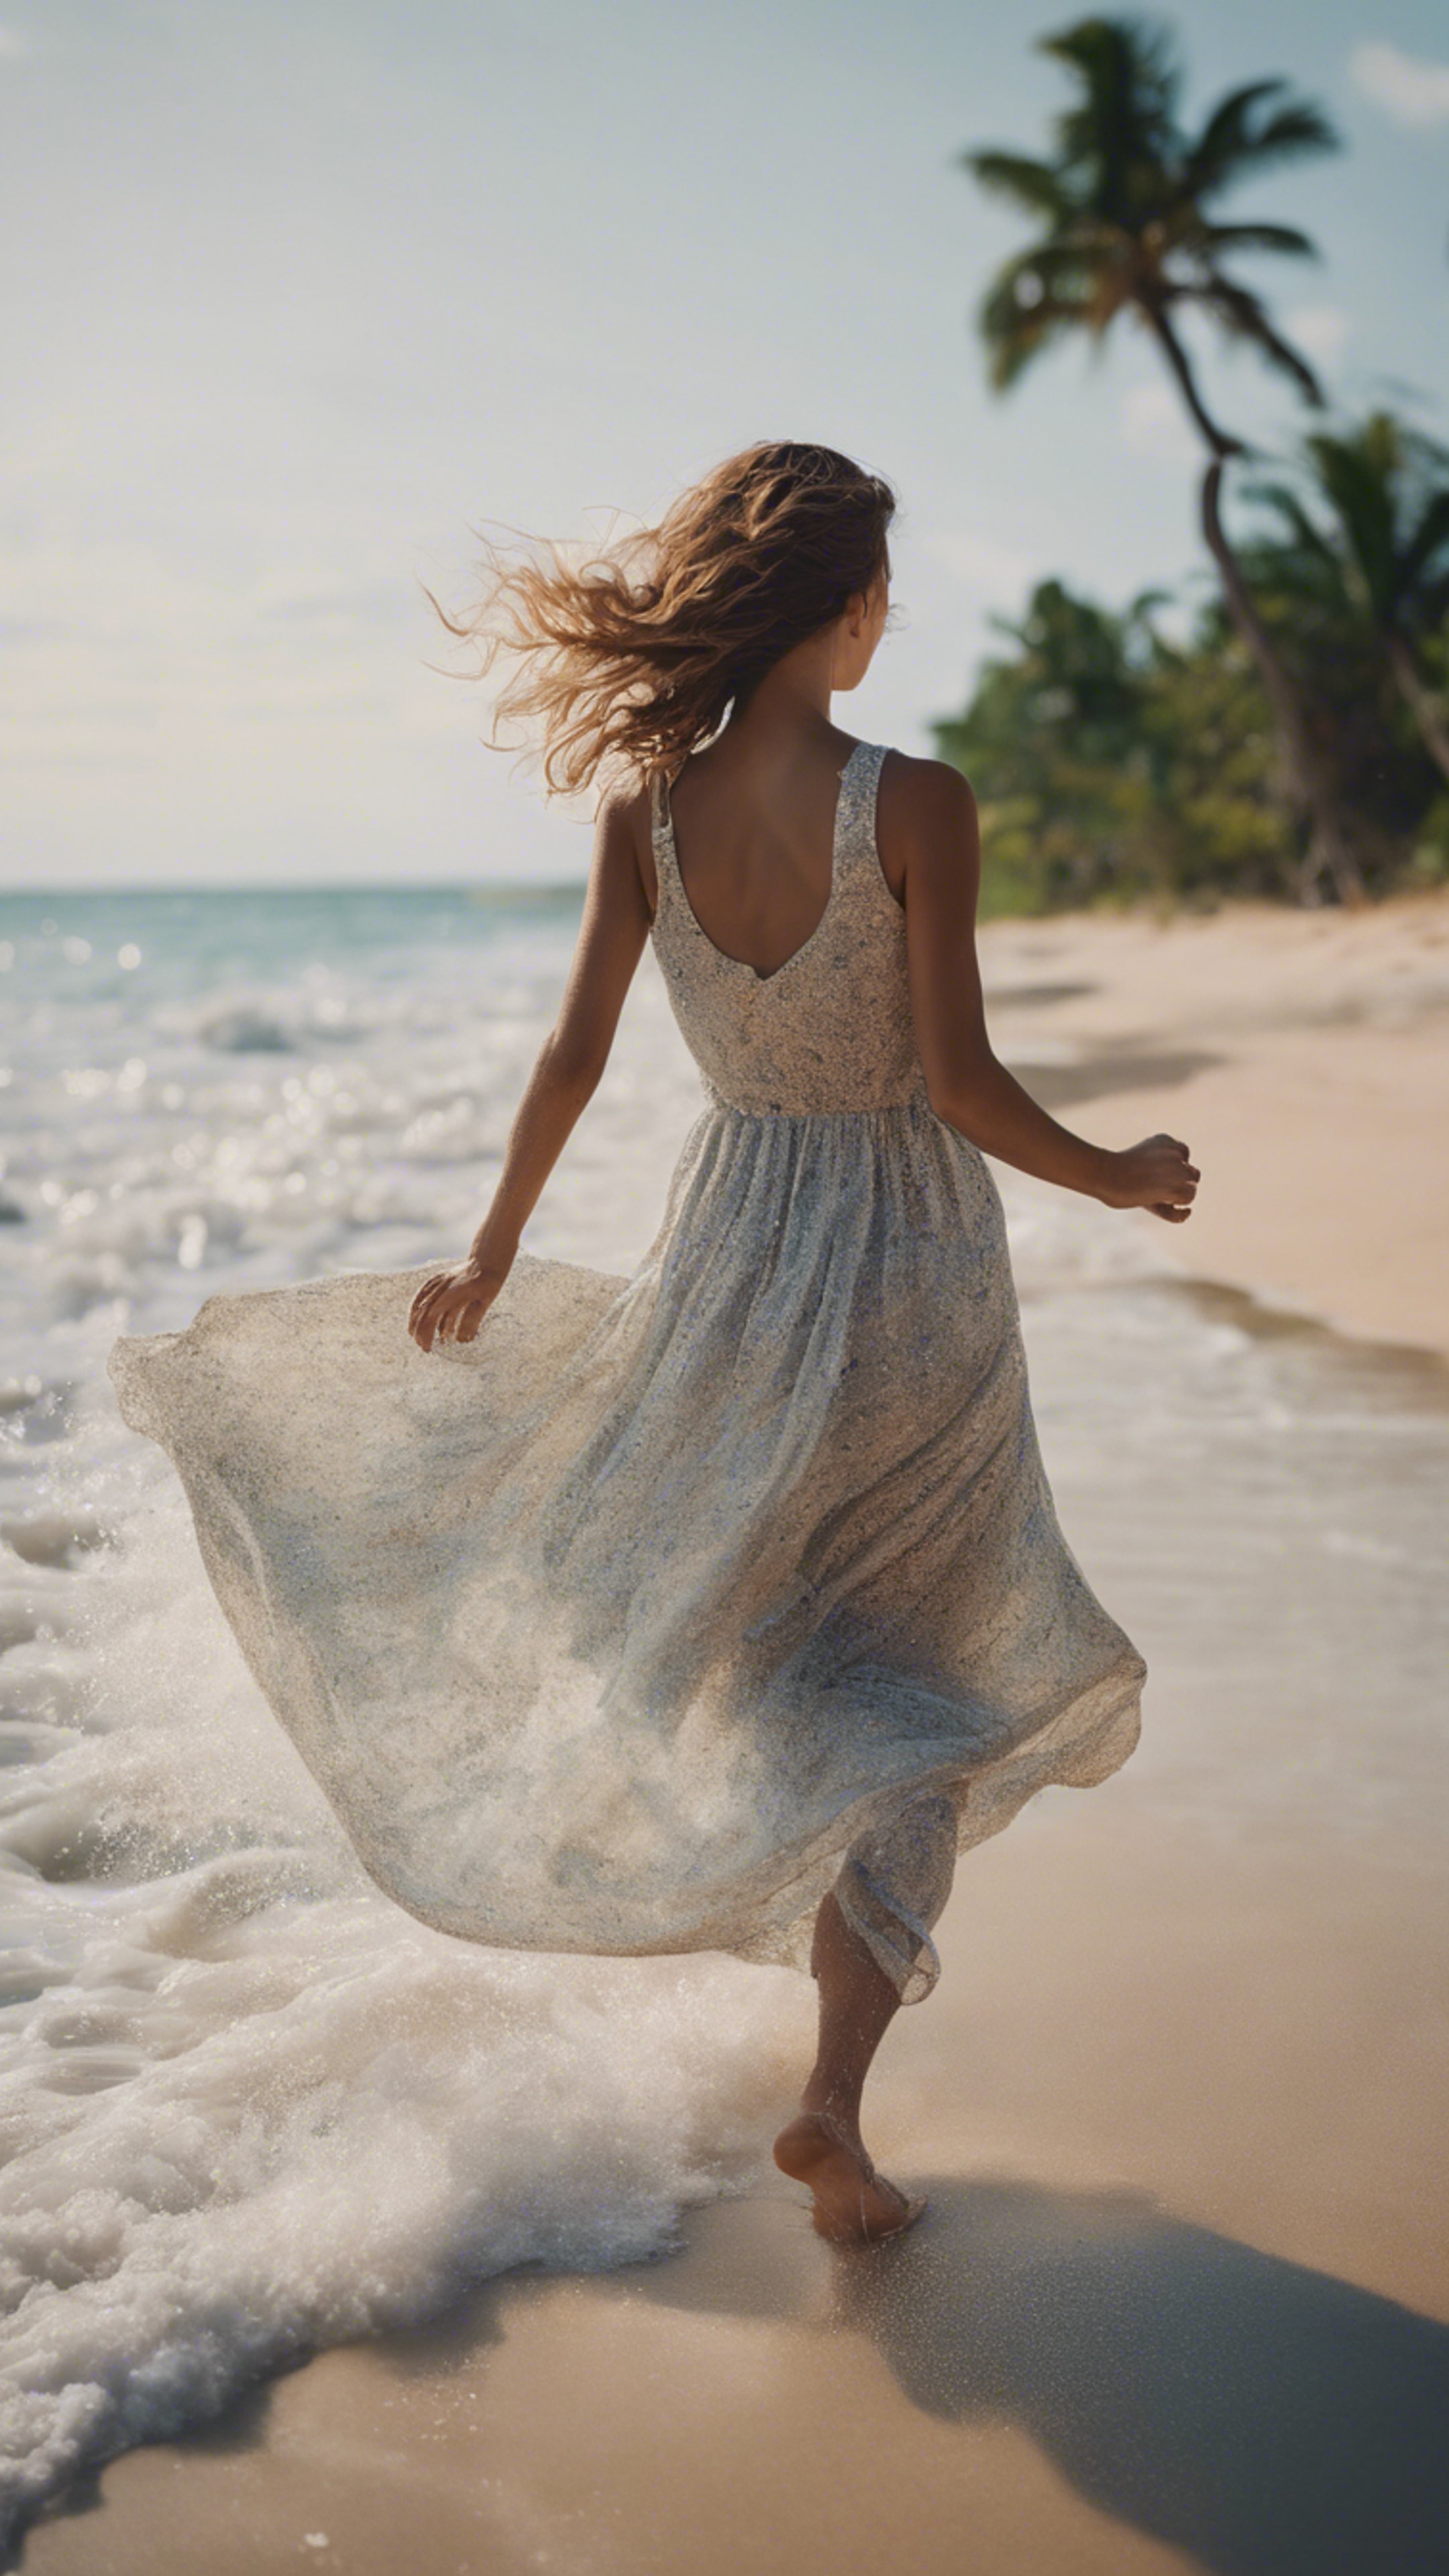 A girl in a flowy dress running alongside the sea at a tropical beach. Обои[6de970100921406193d7]